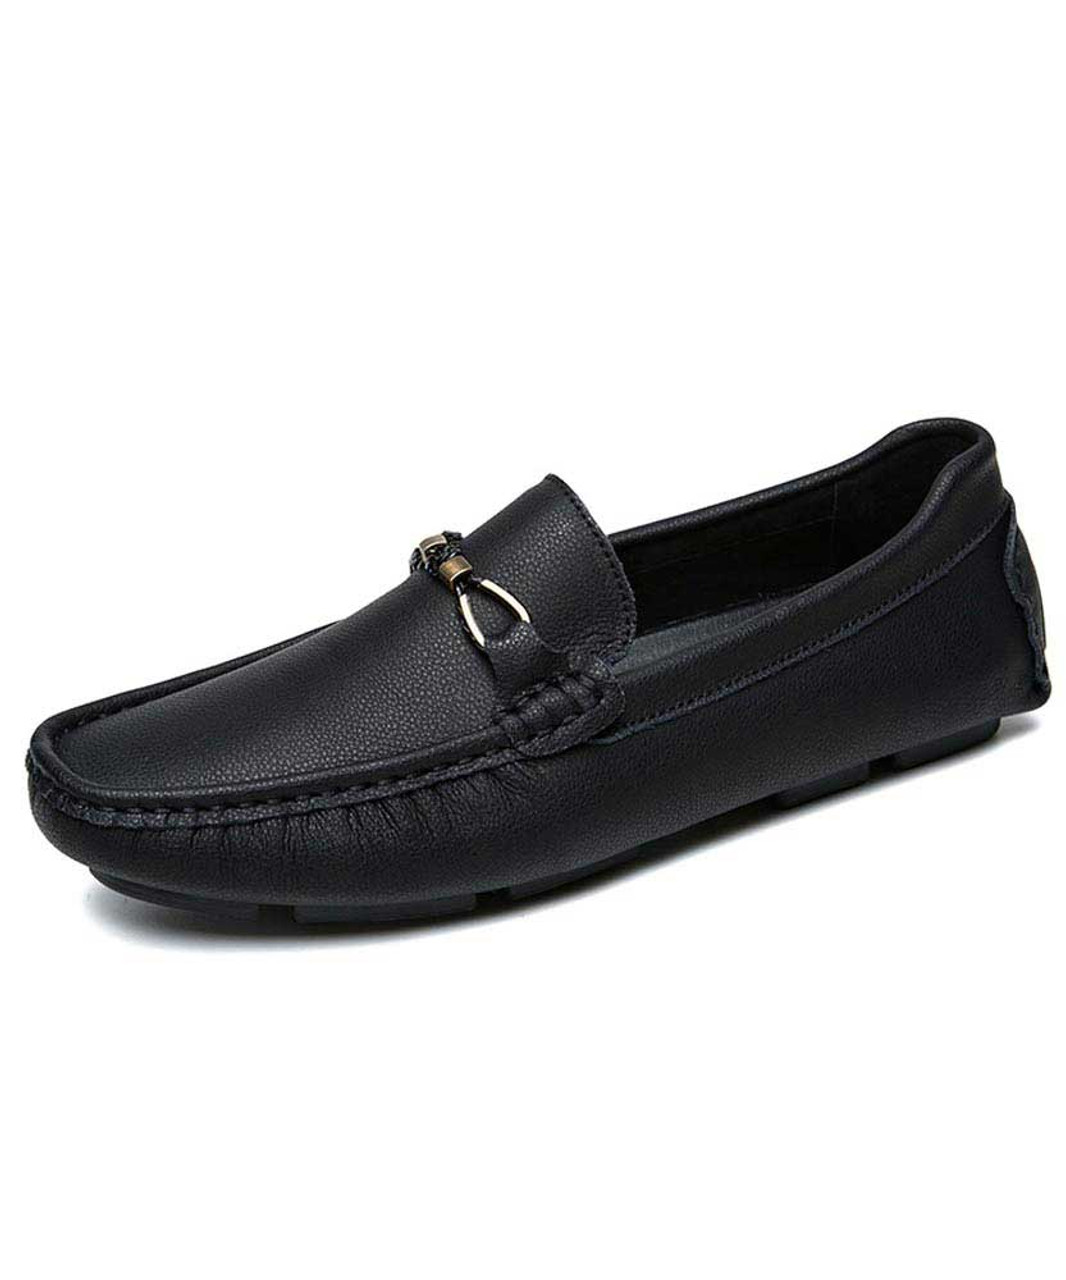 Black leather slip shoe loafer butterfly buckle | Mens shoe loafers online 1697MS